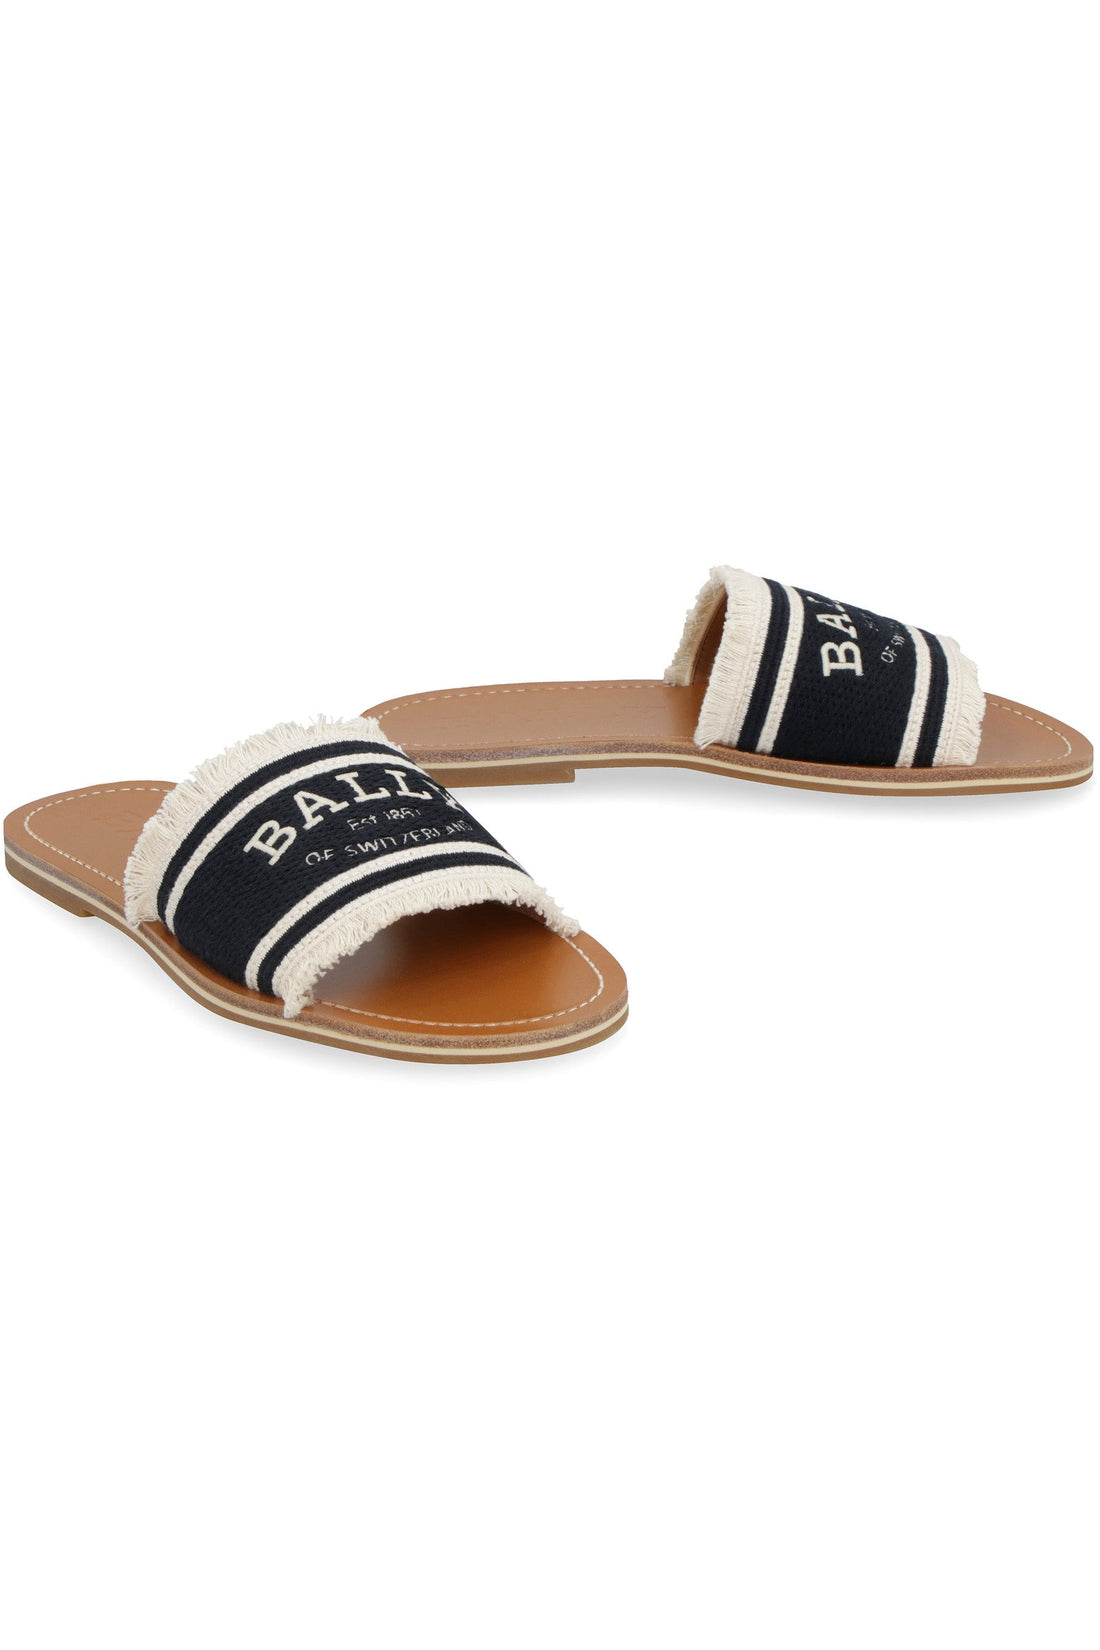 Bally-OUTLET-SALE-Bianca flat sandals-ARCHIVIST